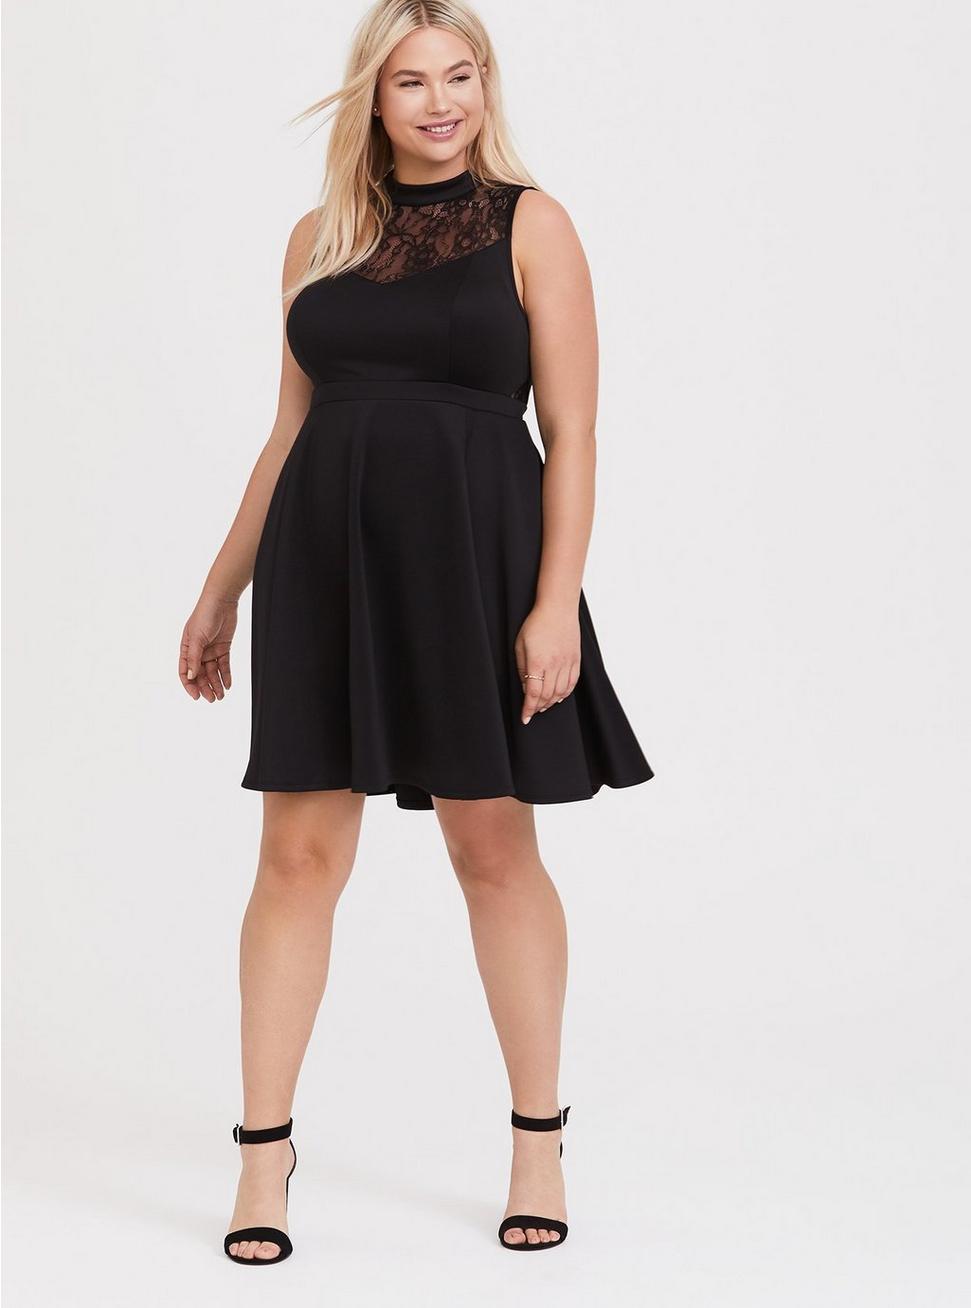 Plus Size - Black Scuba Knit & Lace Skater Dress - Torrid